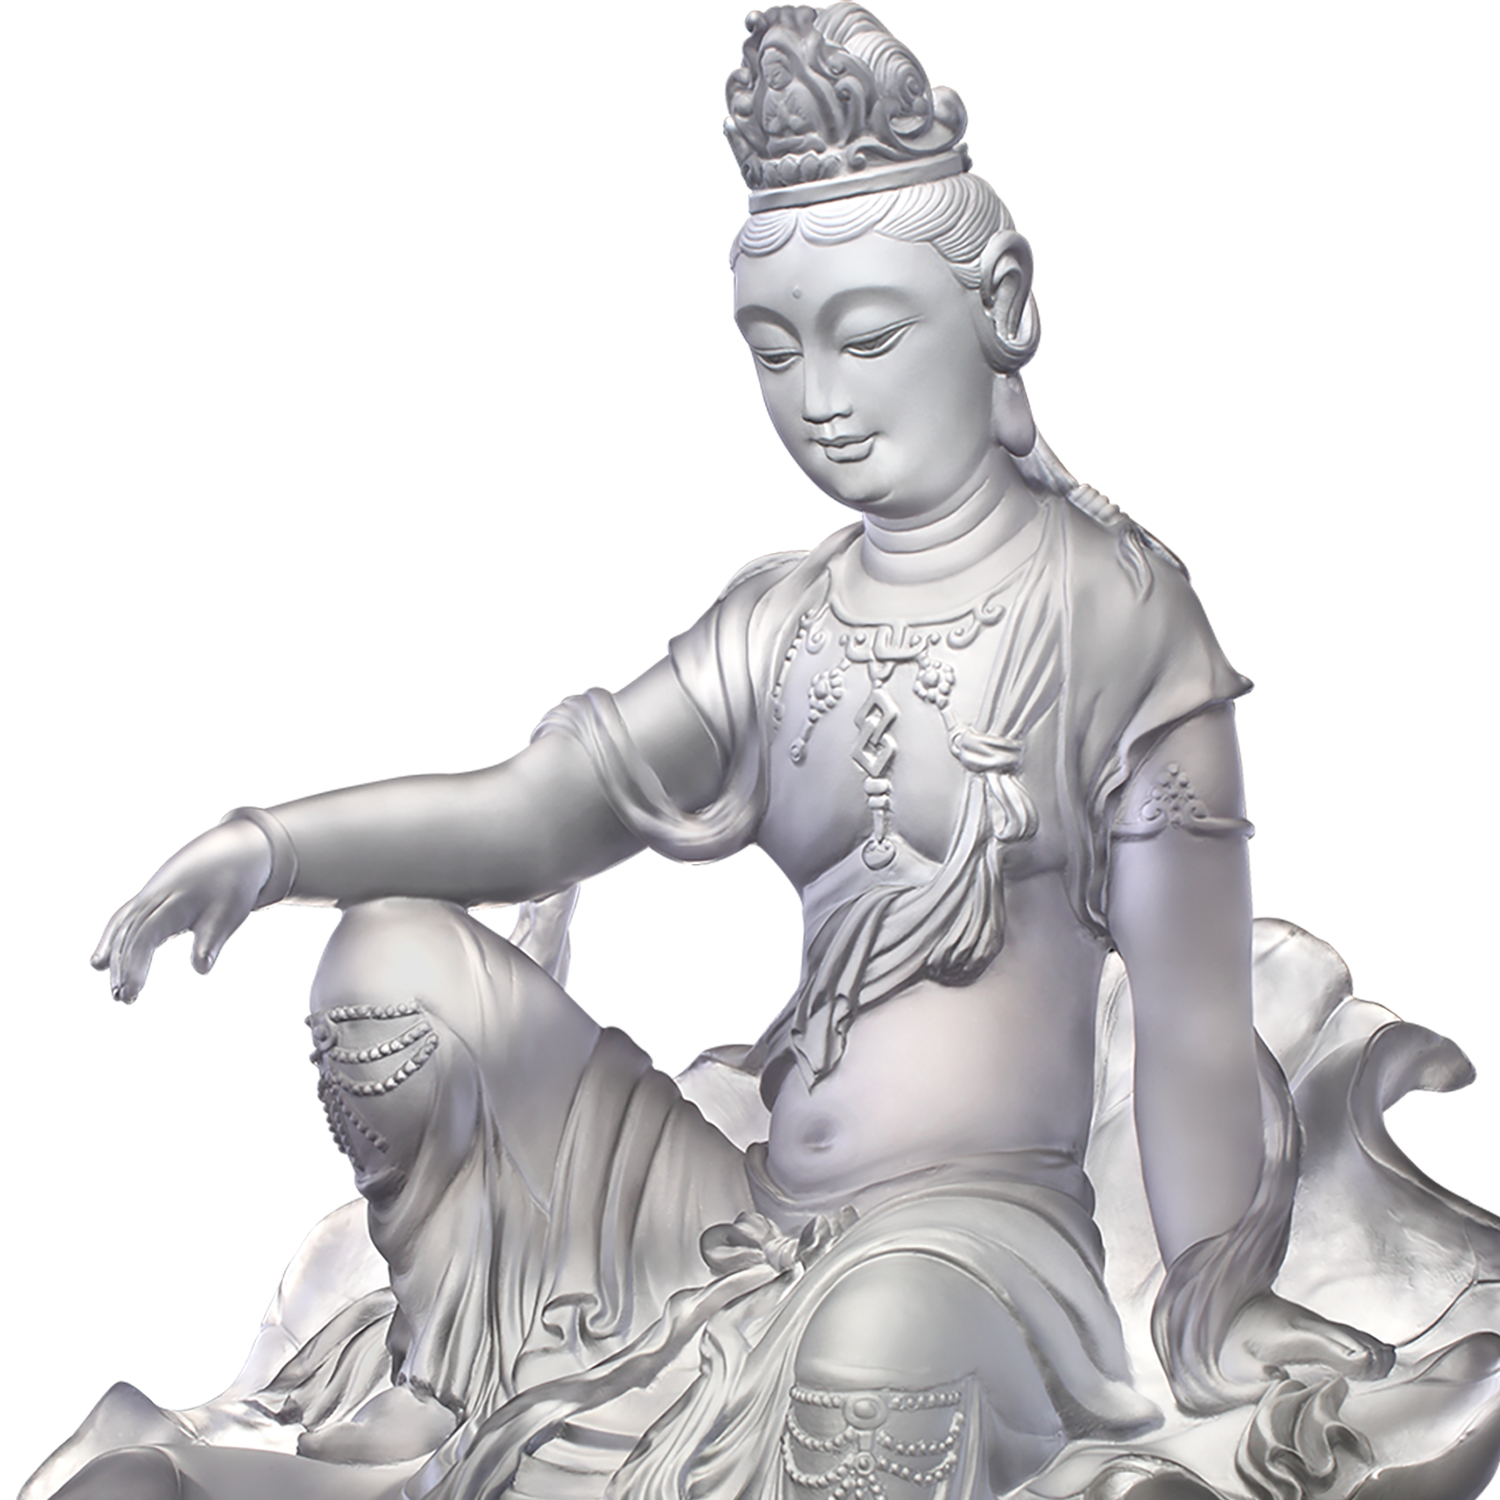 Crystal Buddha, Guanyin, Mortal Smile-Guanyin of Fulfillment and Purity - LIULI Crystal Art